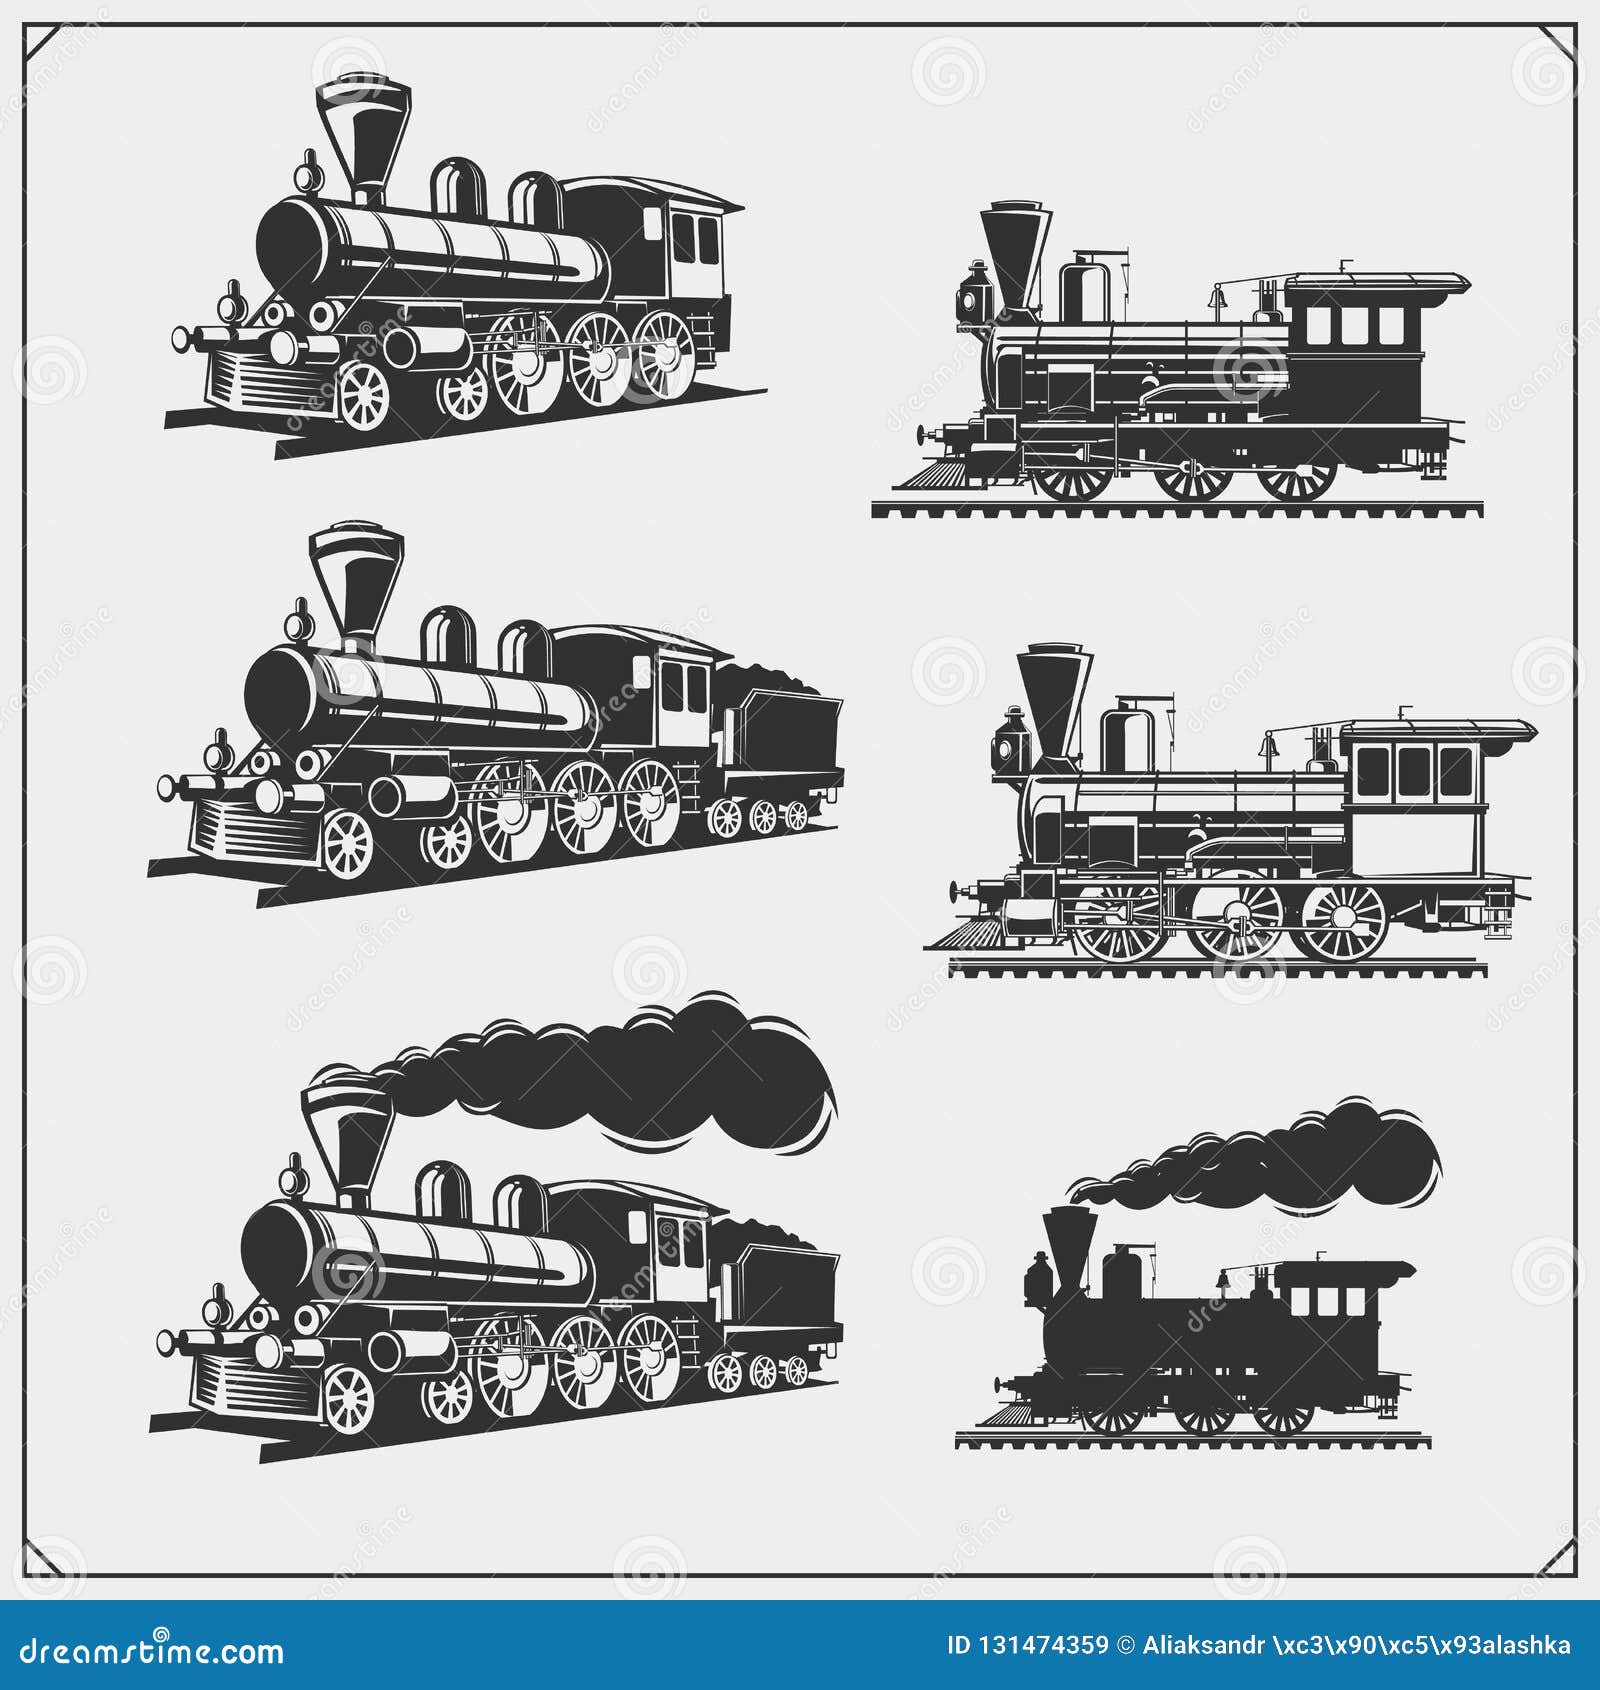 Steam train model railways railway signs t shirt 